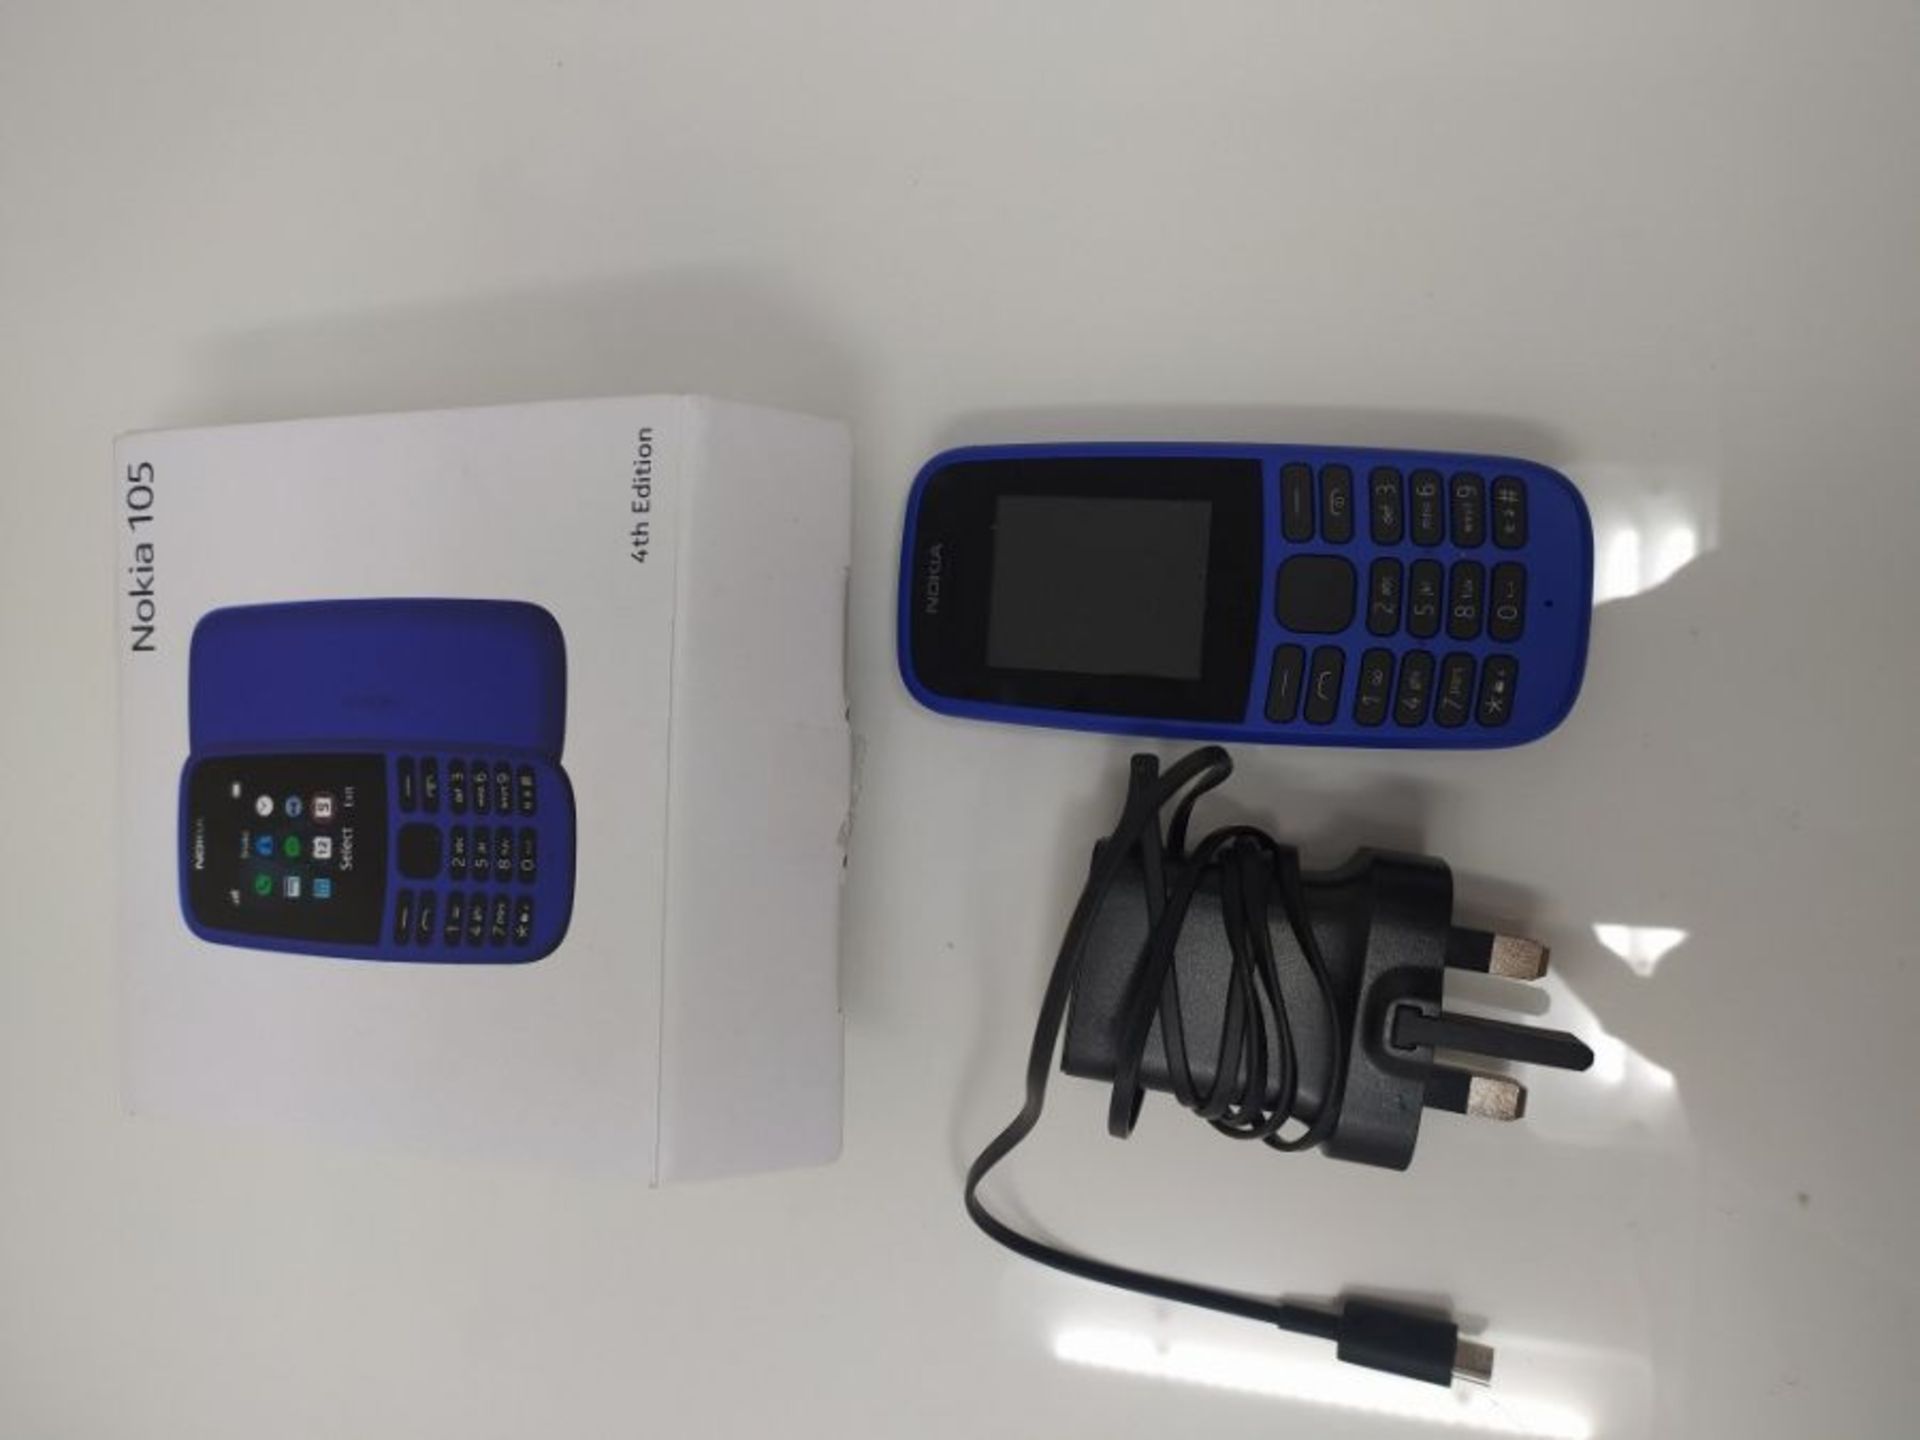 Nokia 105 (4 edition) 1.77 Inch UK SIM Free Feature Phone (Single SIM)  Blue - Image 2 of 2